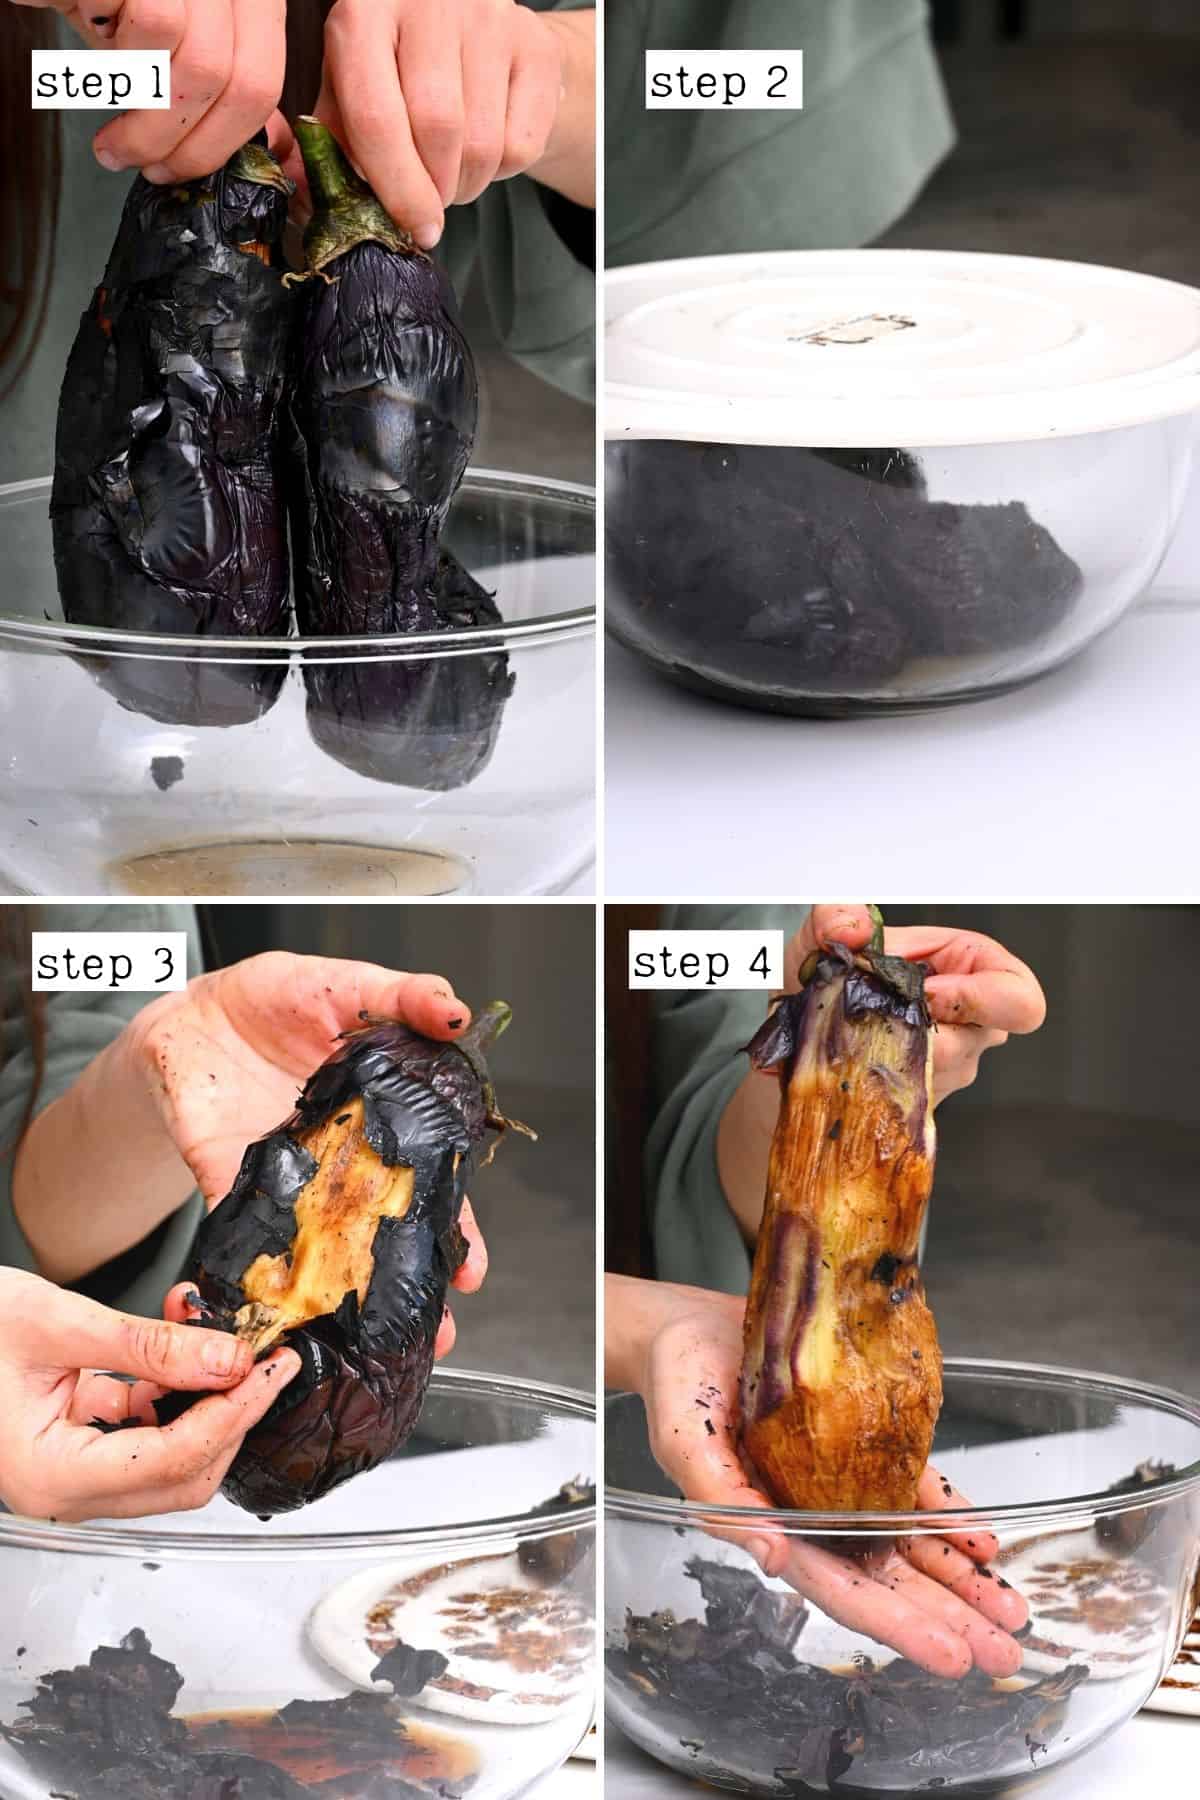 Steps for peeling charred eggplant